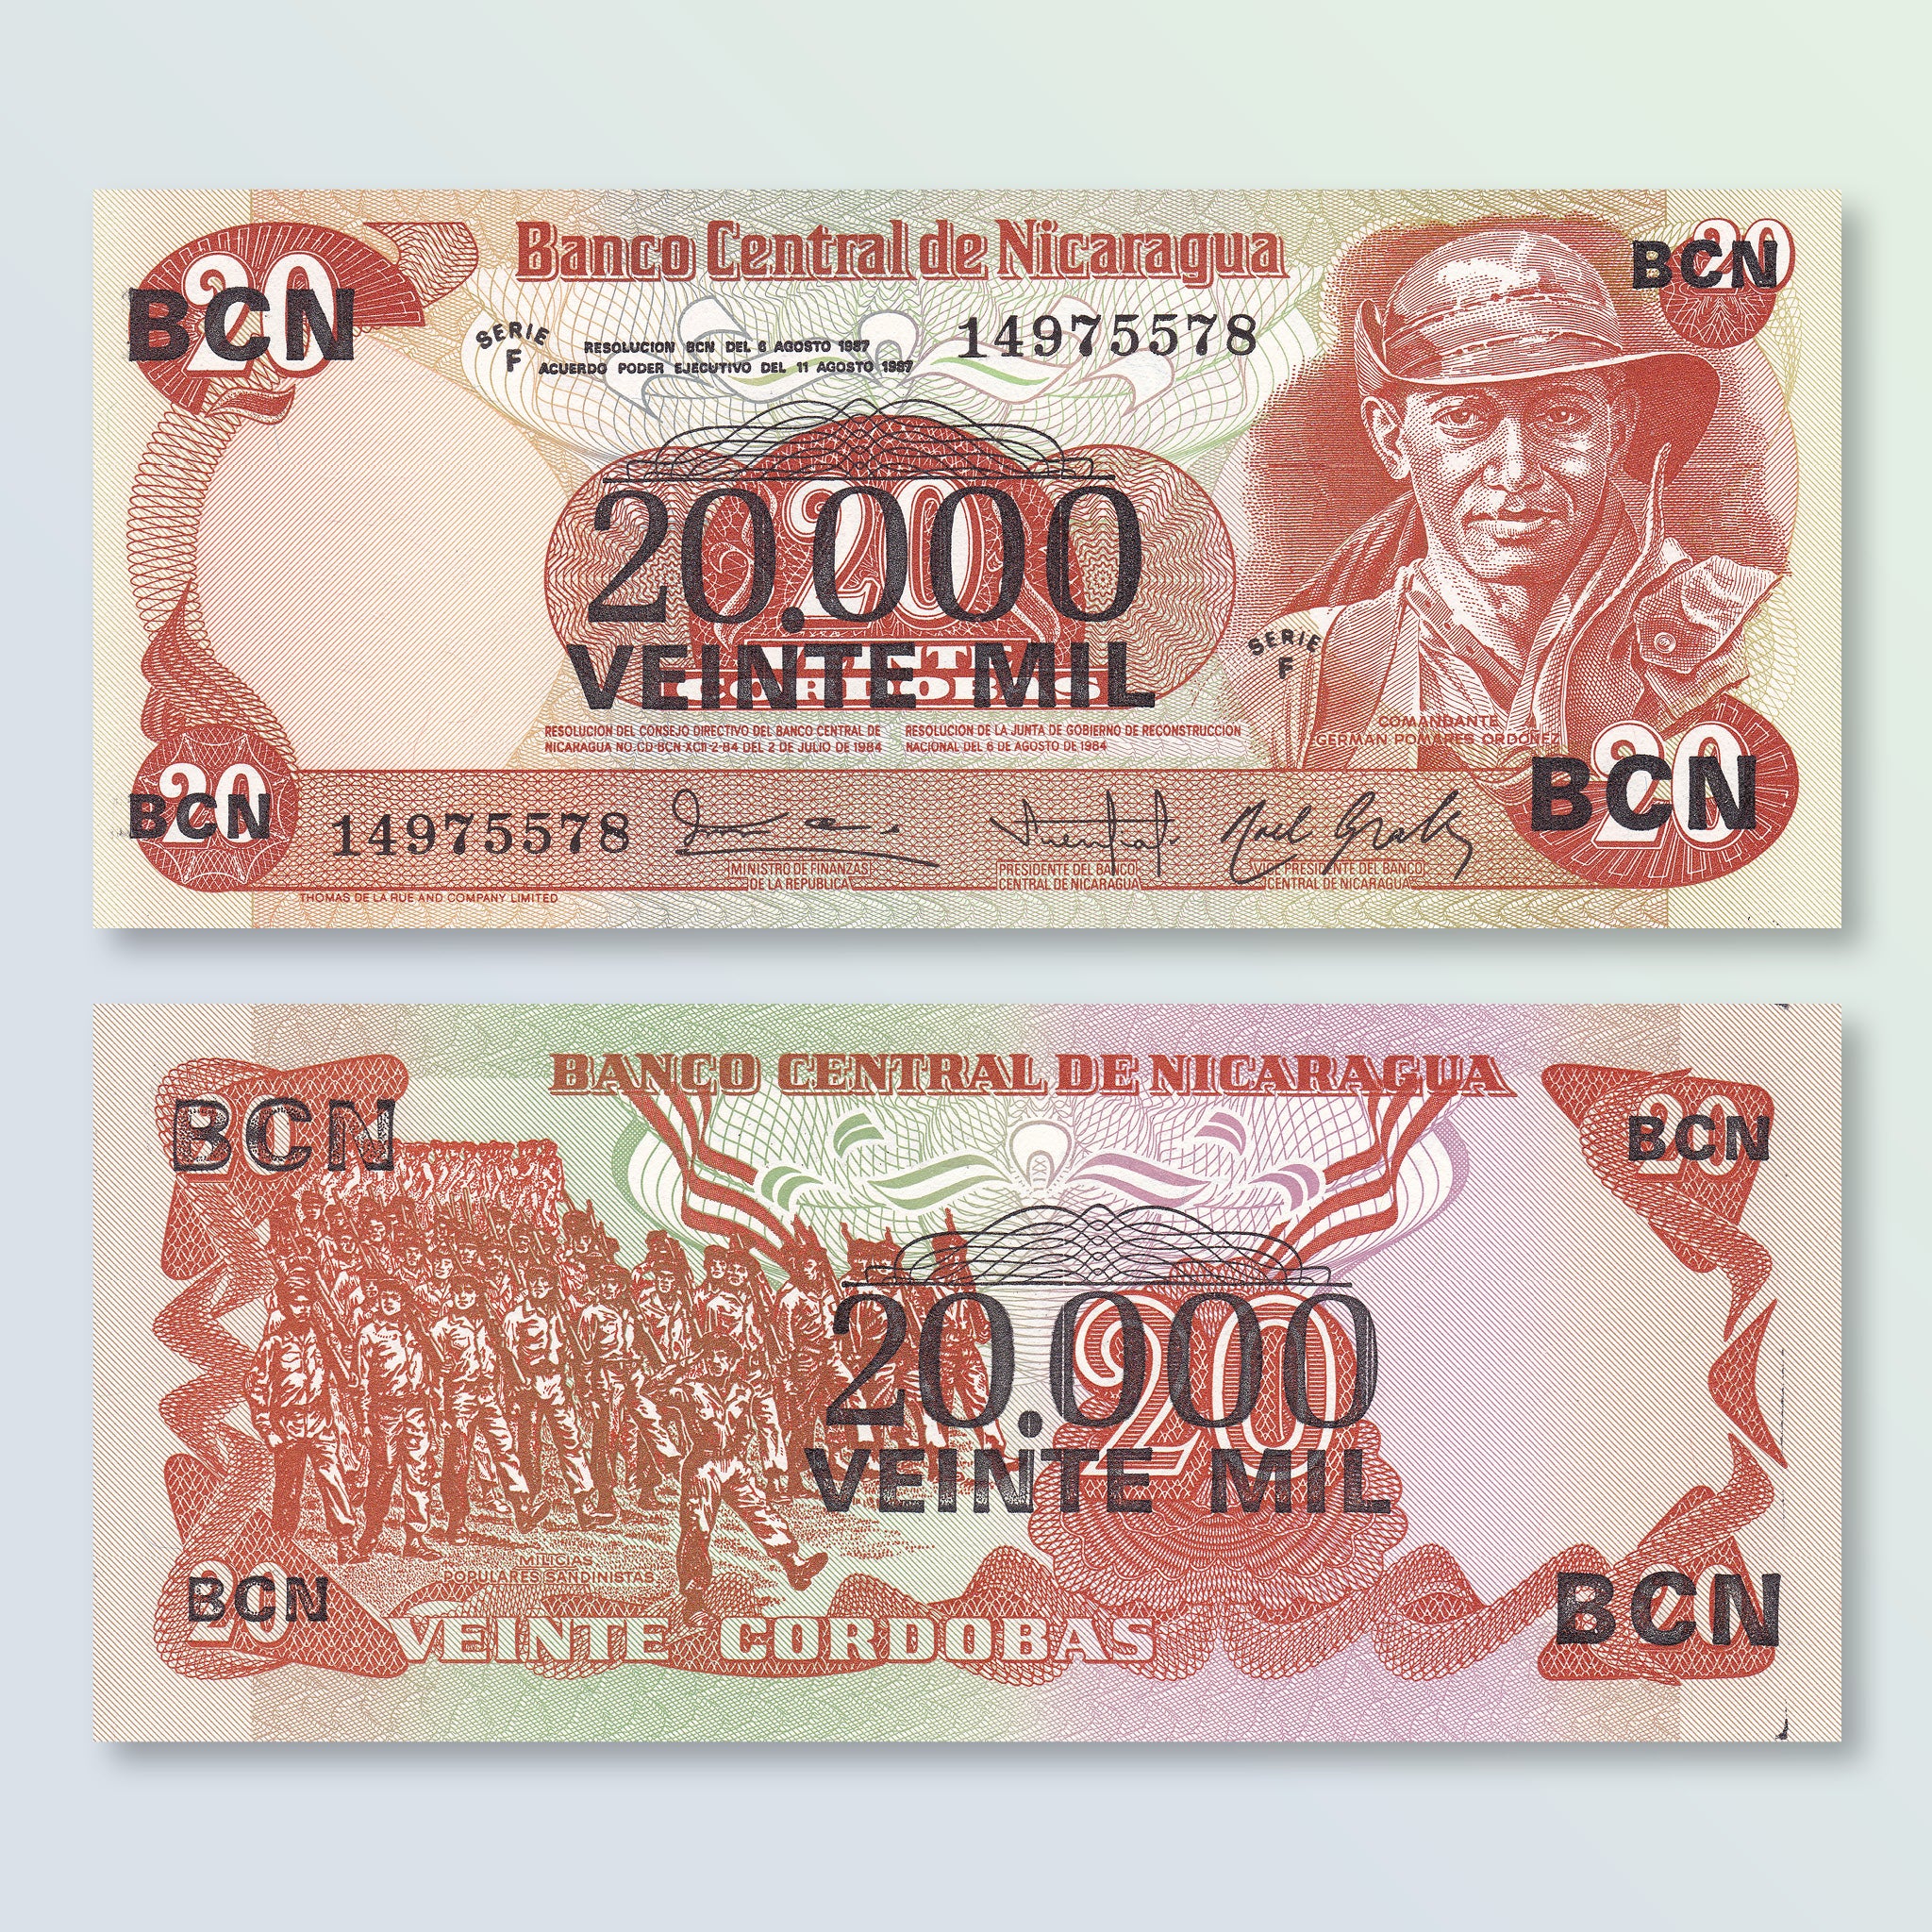 Nicaragua 20000 Córdobas, 1987, B441a, P147, UNC - Robert's World Money - World Banknotes